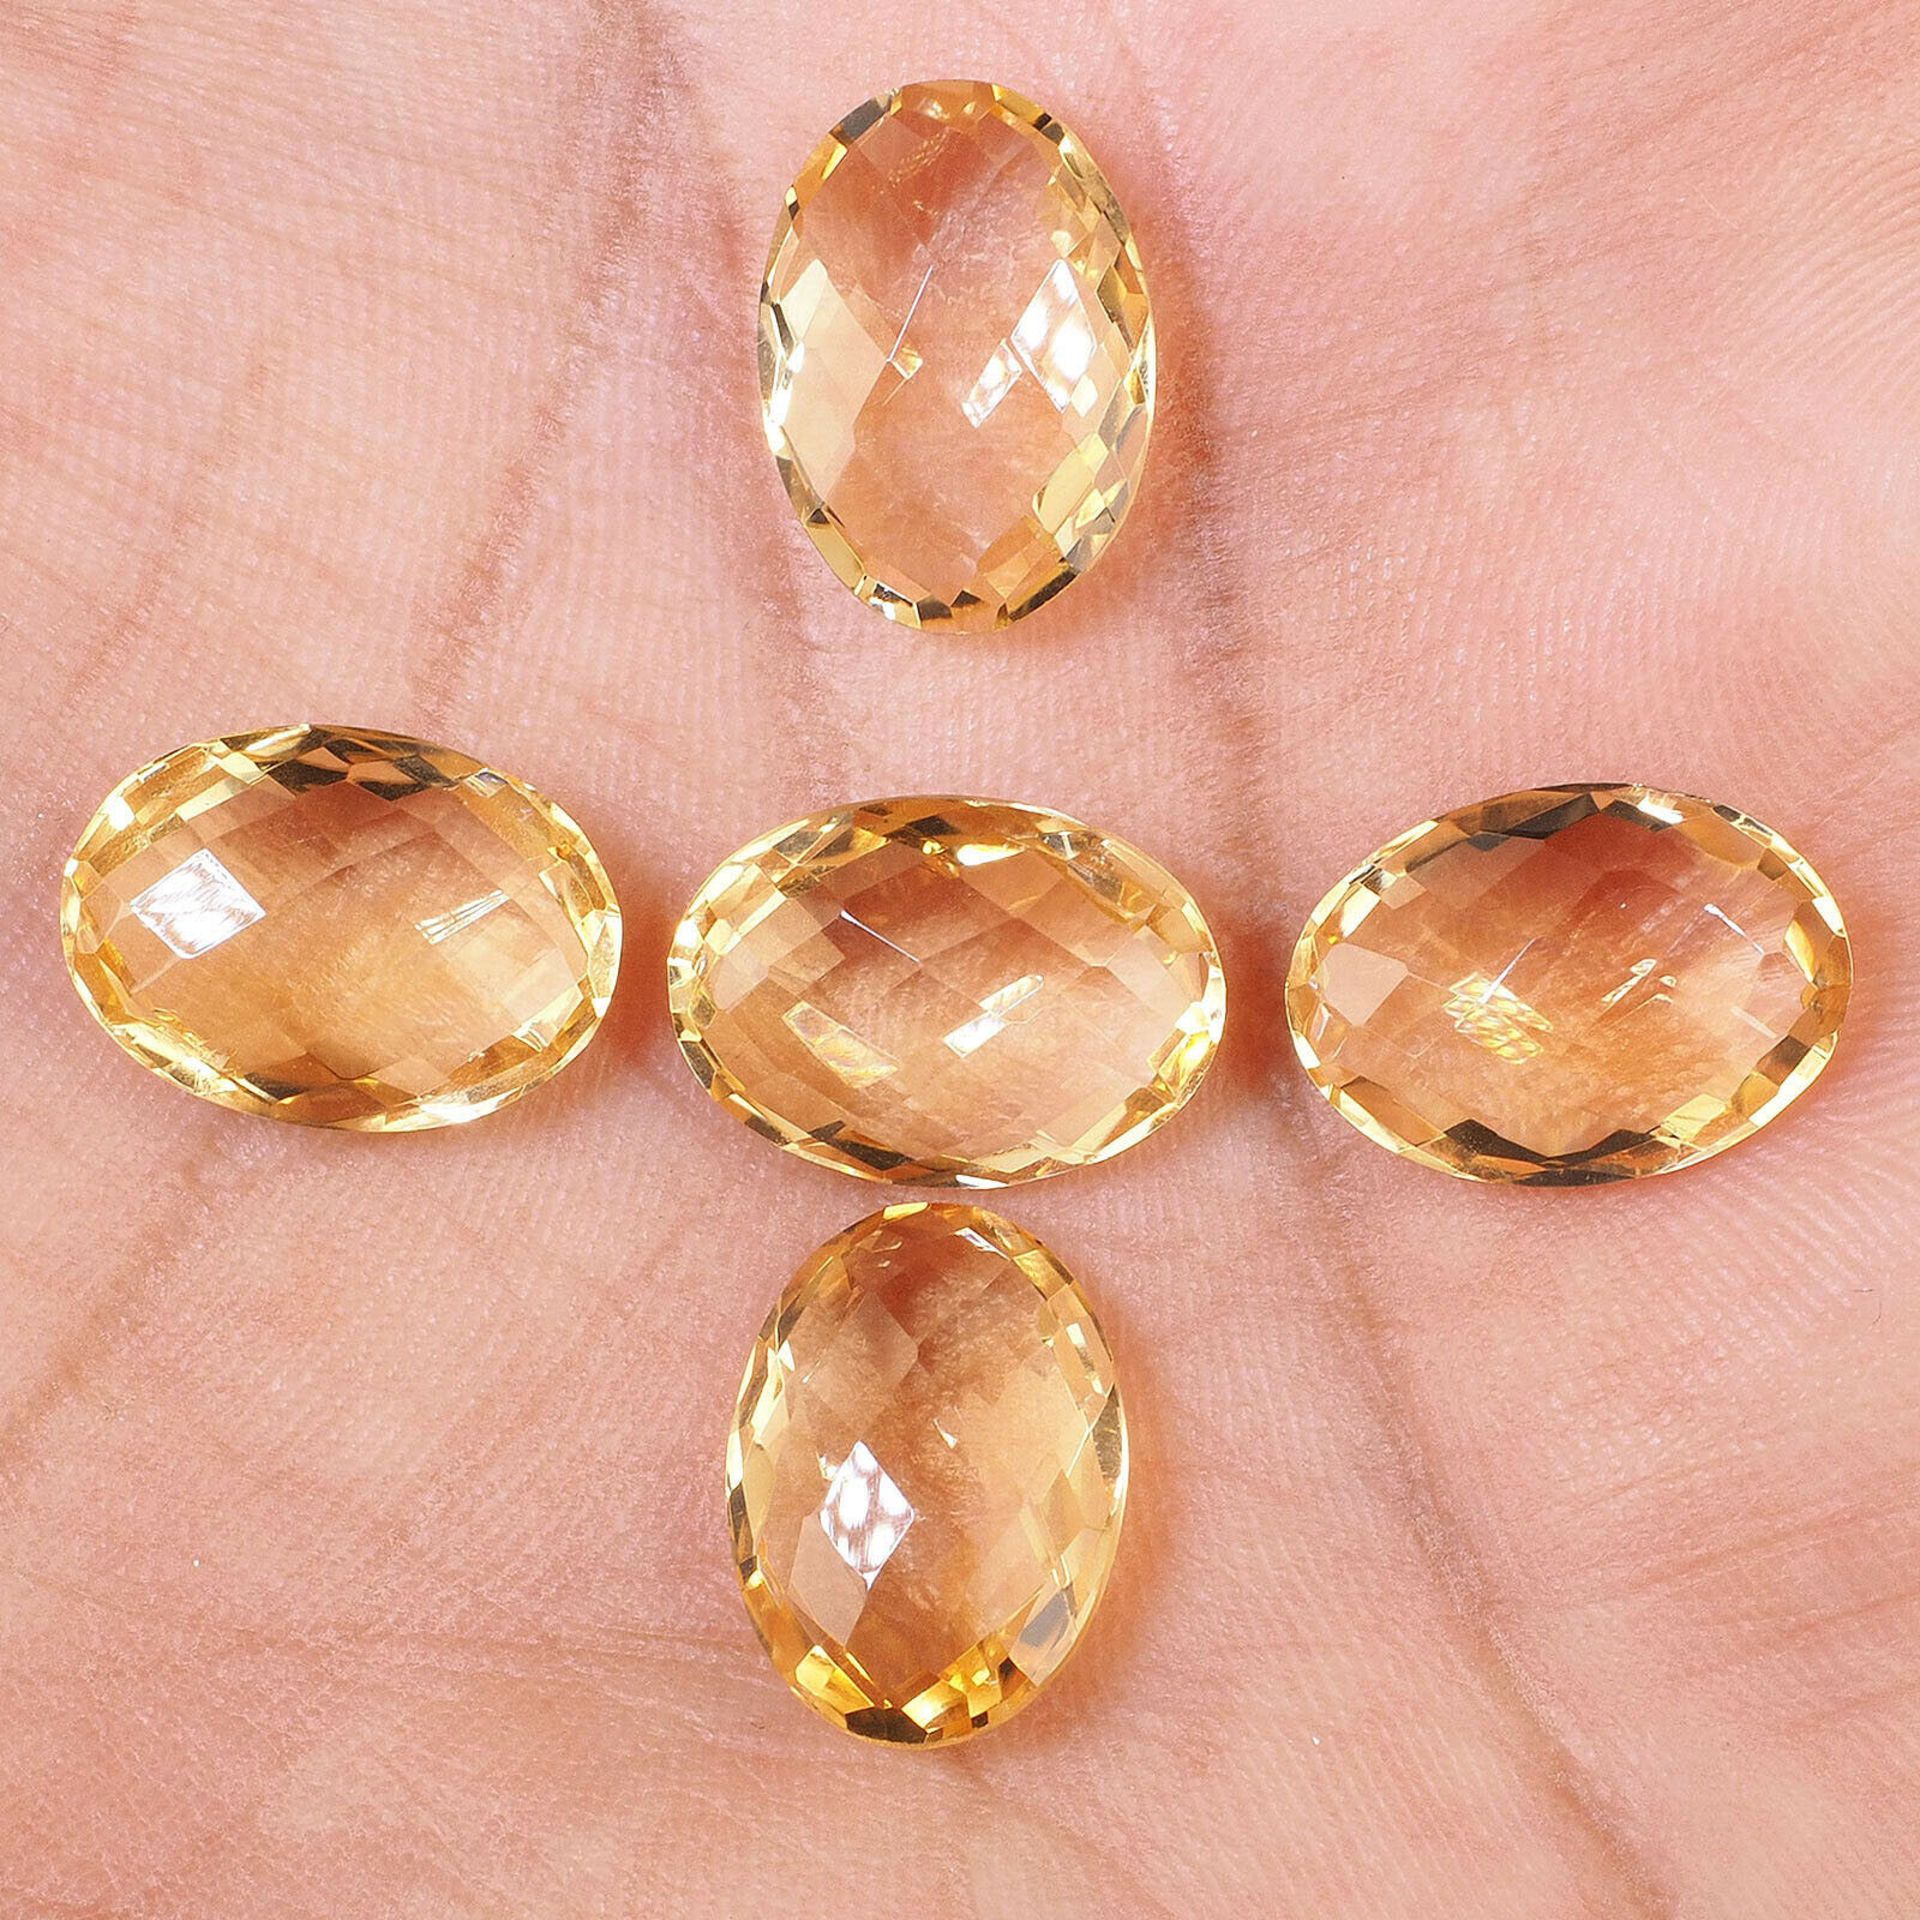 Natural Citrine - 23.65 carats - 5 pieces - Clarity VVS - average retail value £ 228.57